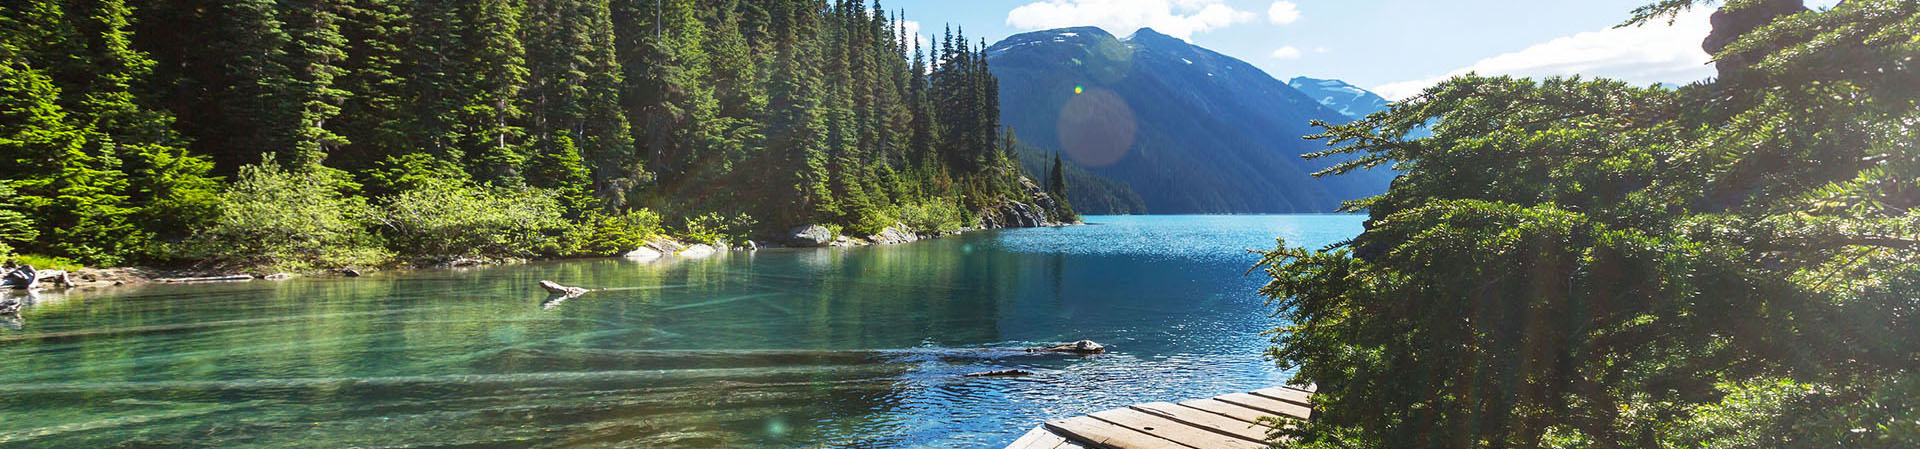 Picturesque Garibaldi Lake near Whistler, BC, Canada.